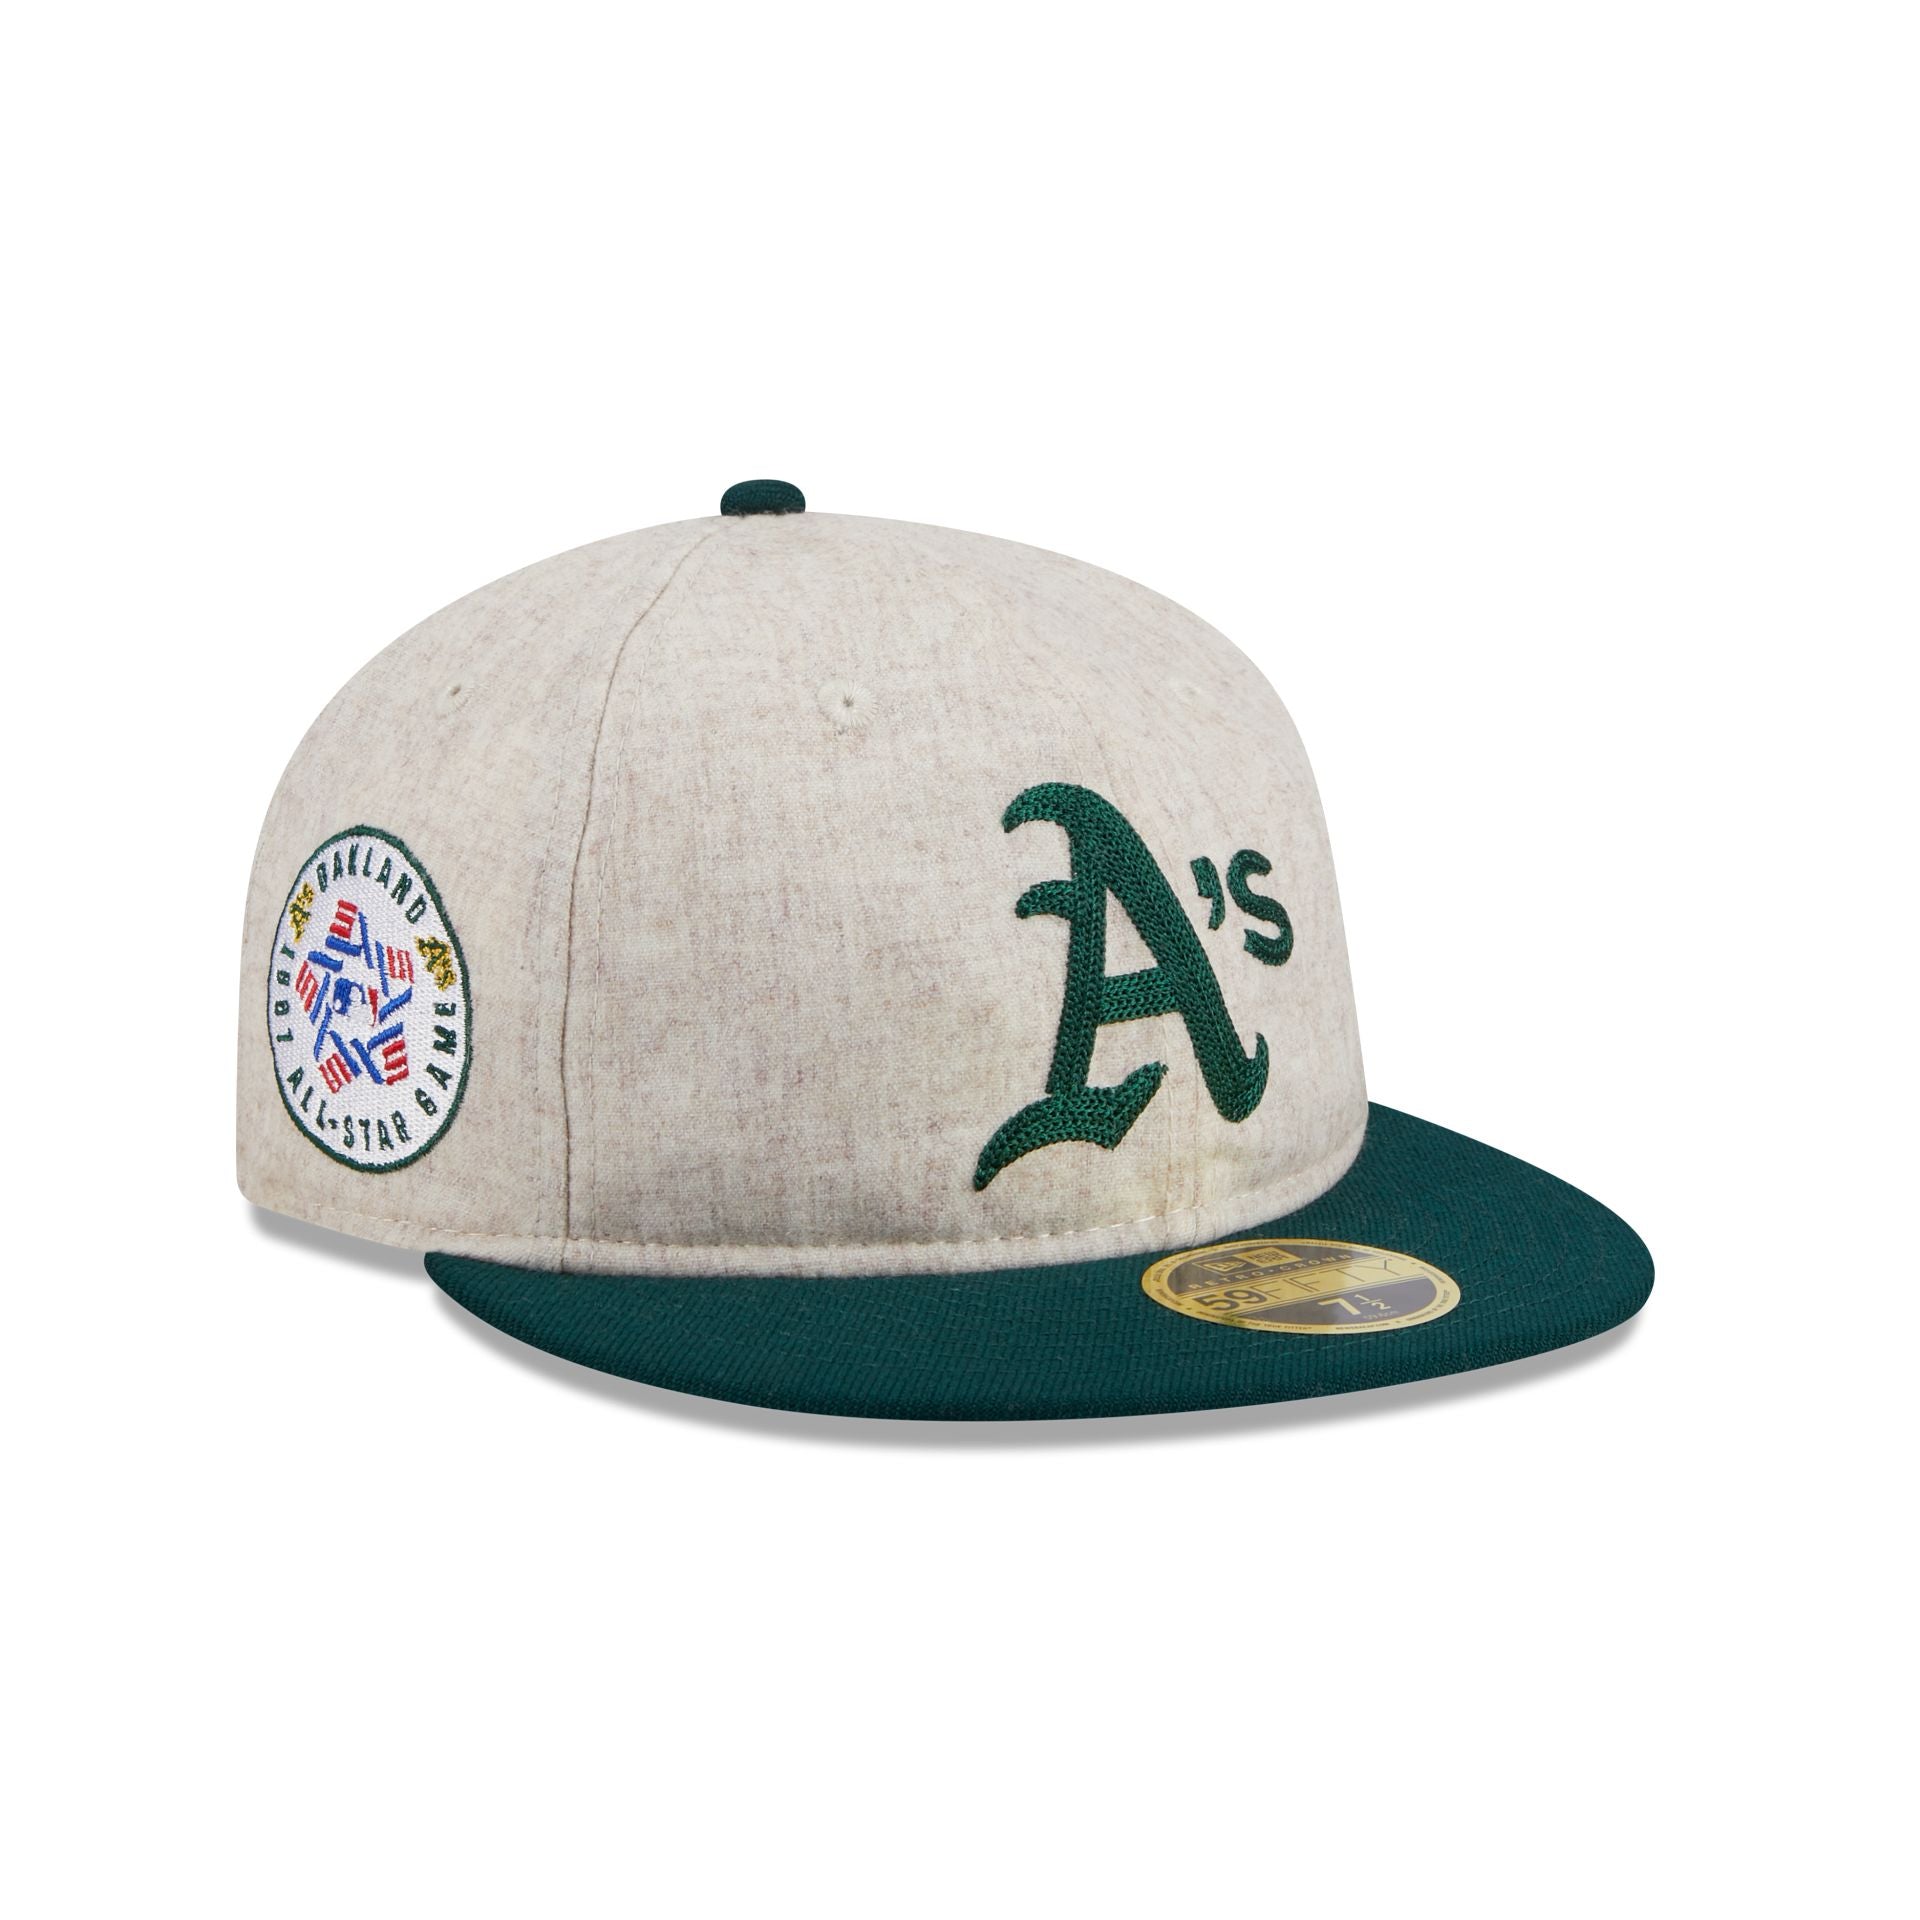 Official Oakland Athletics Baseball Hats, A's Caps, A's Hat, Beanies